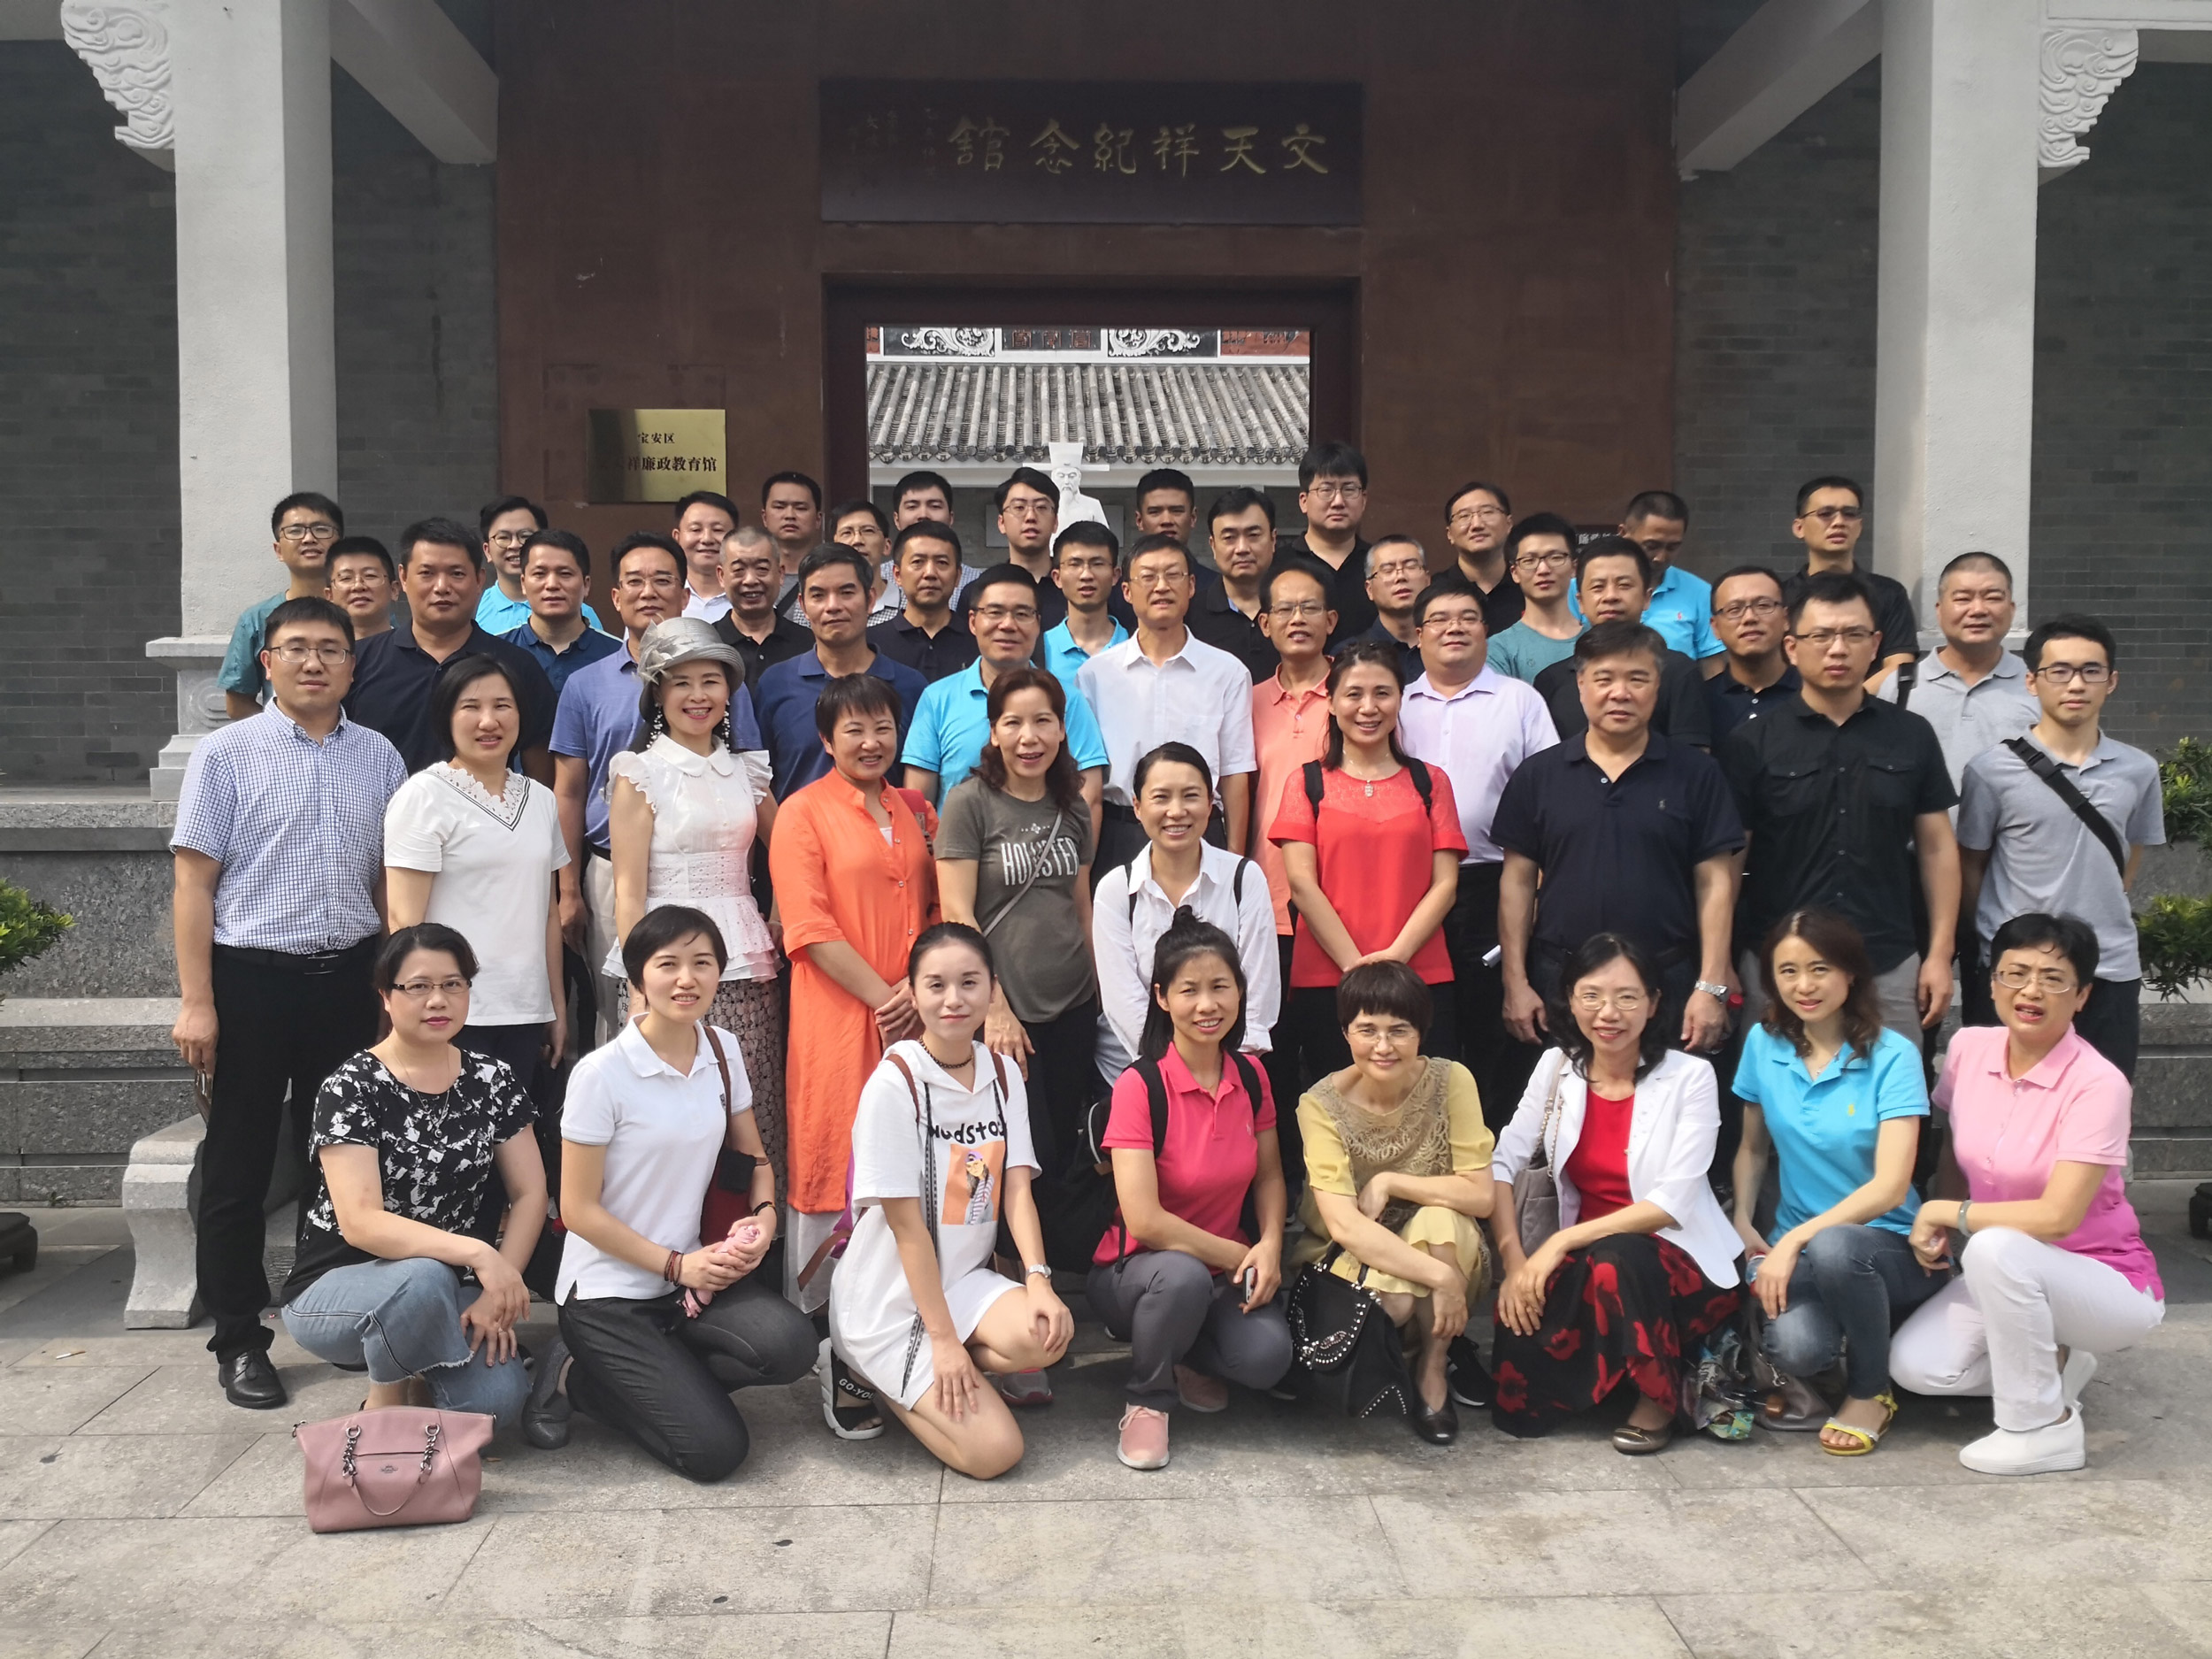  KOK
集团党委召开2018年纪律教育学习月活动动员会